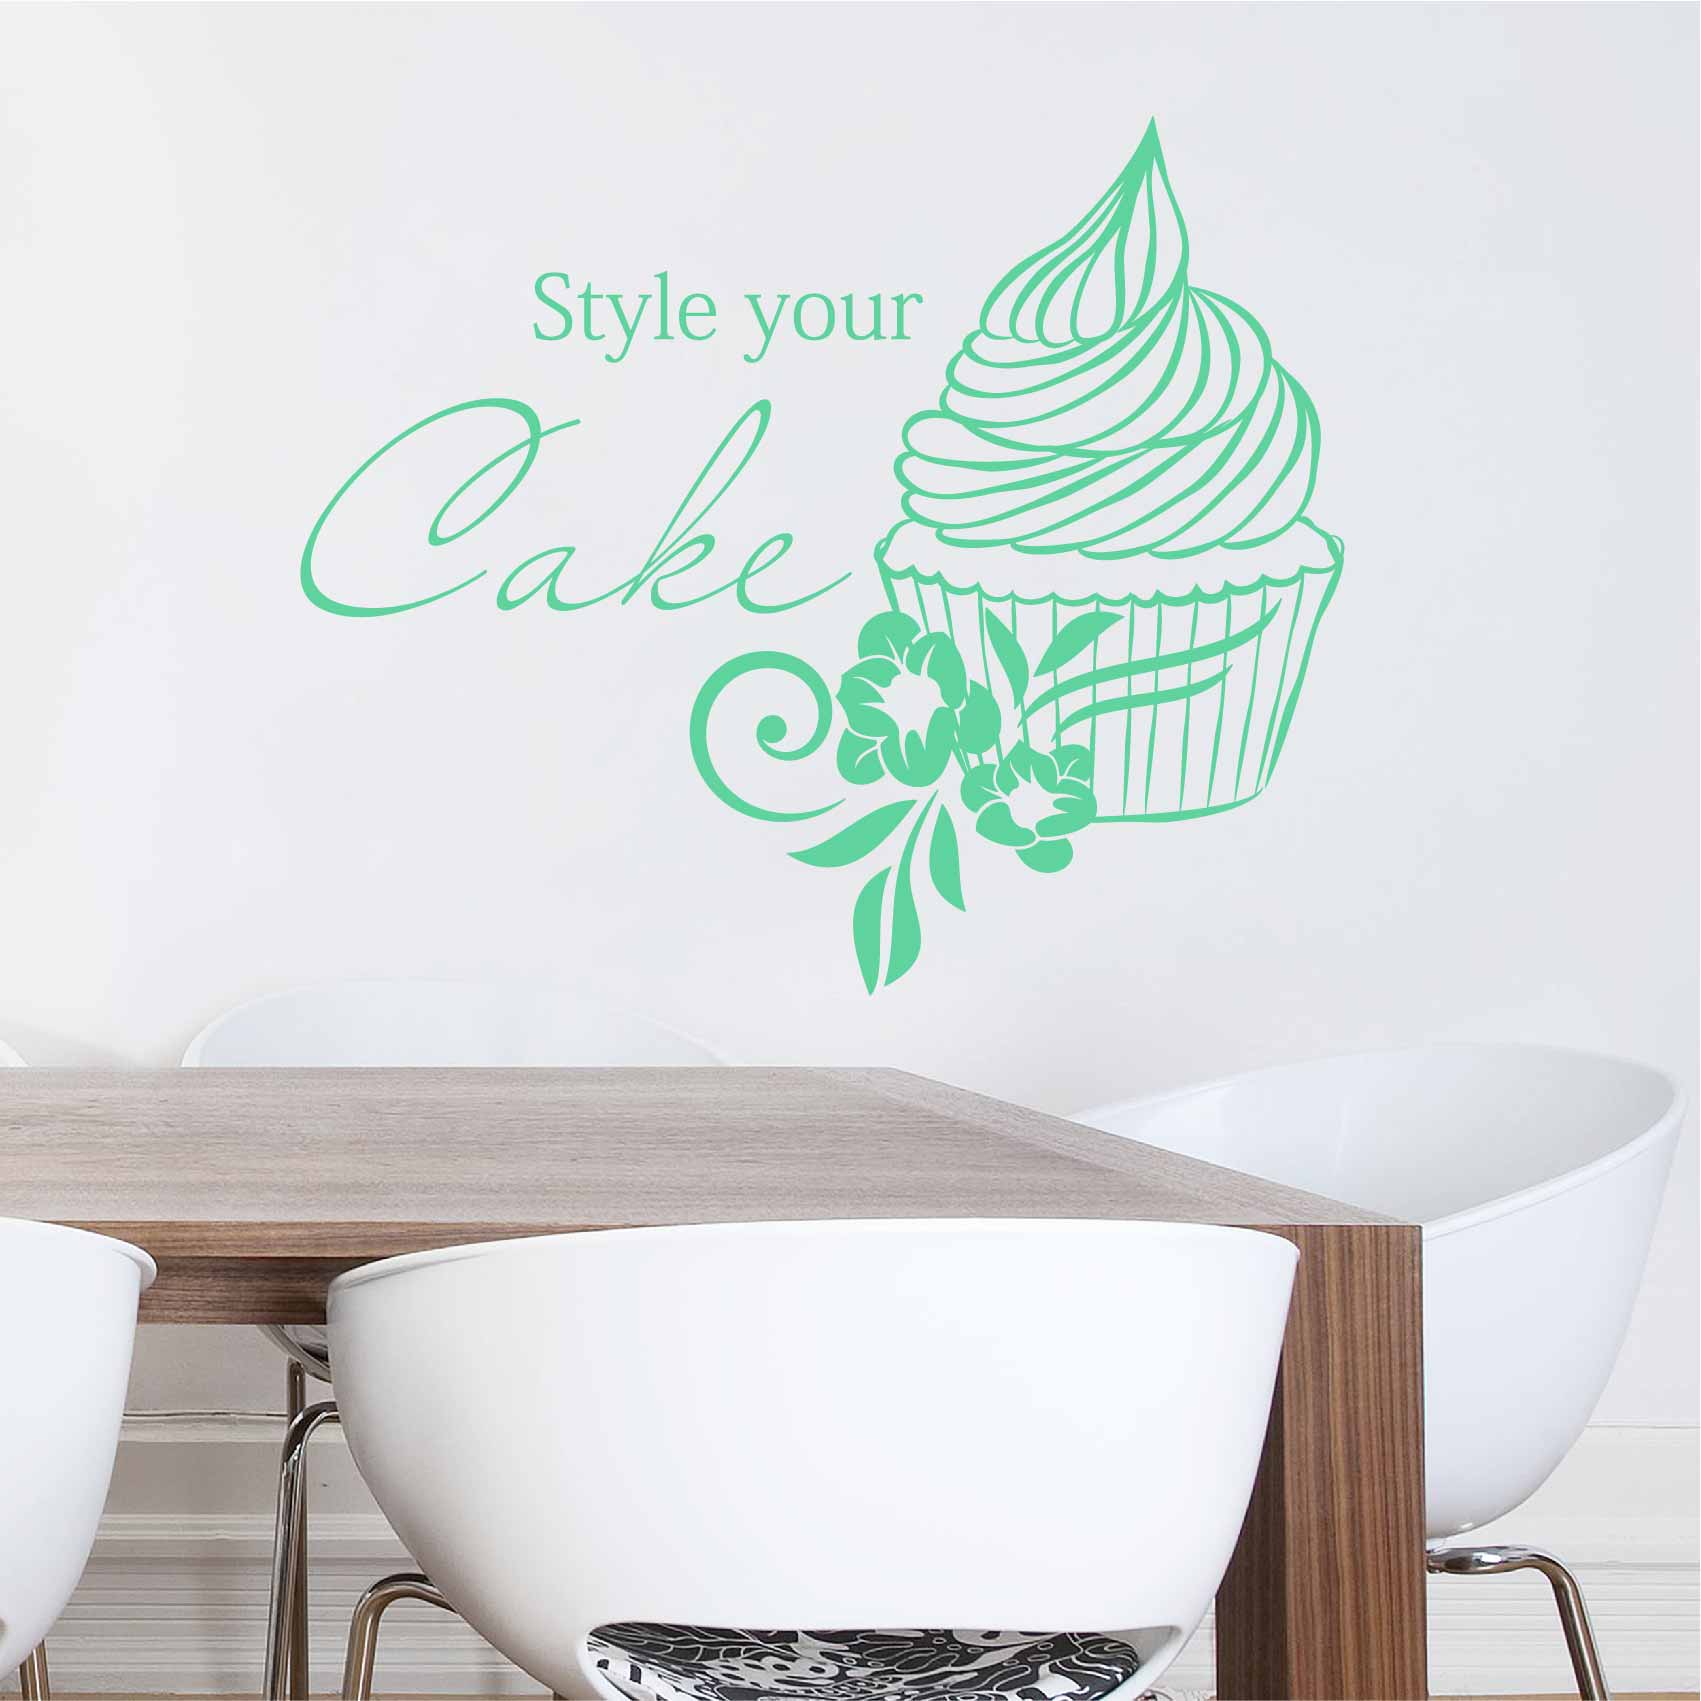 stickers-style-your-cake-ref6cupcake-autocollant-muraux-cuisine-salle-a-manger-salon-sticker-mural-deco-gateau-cupcakes-gateaux